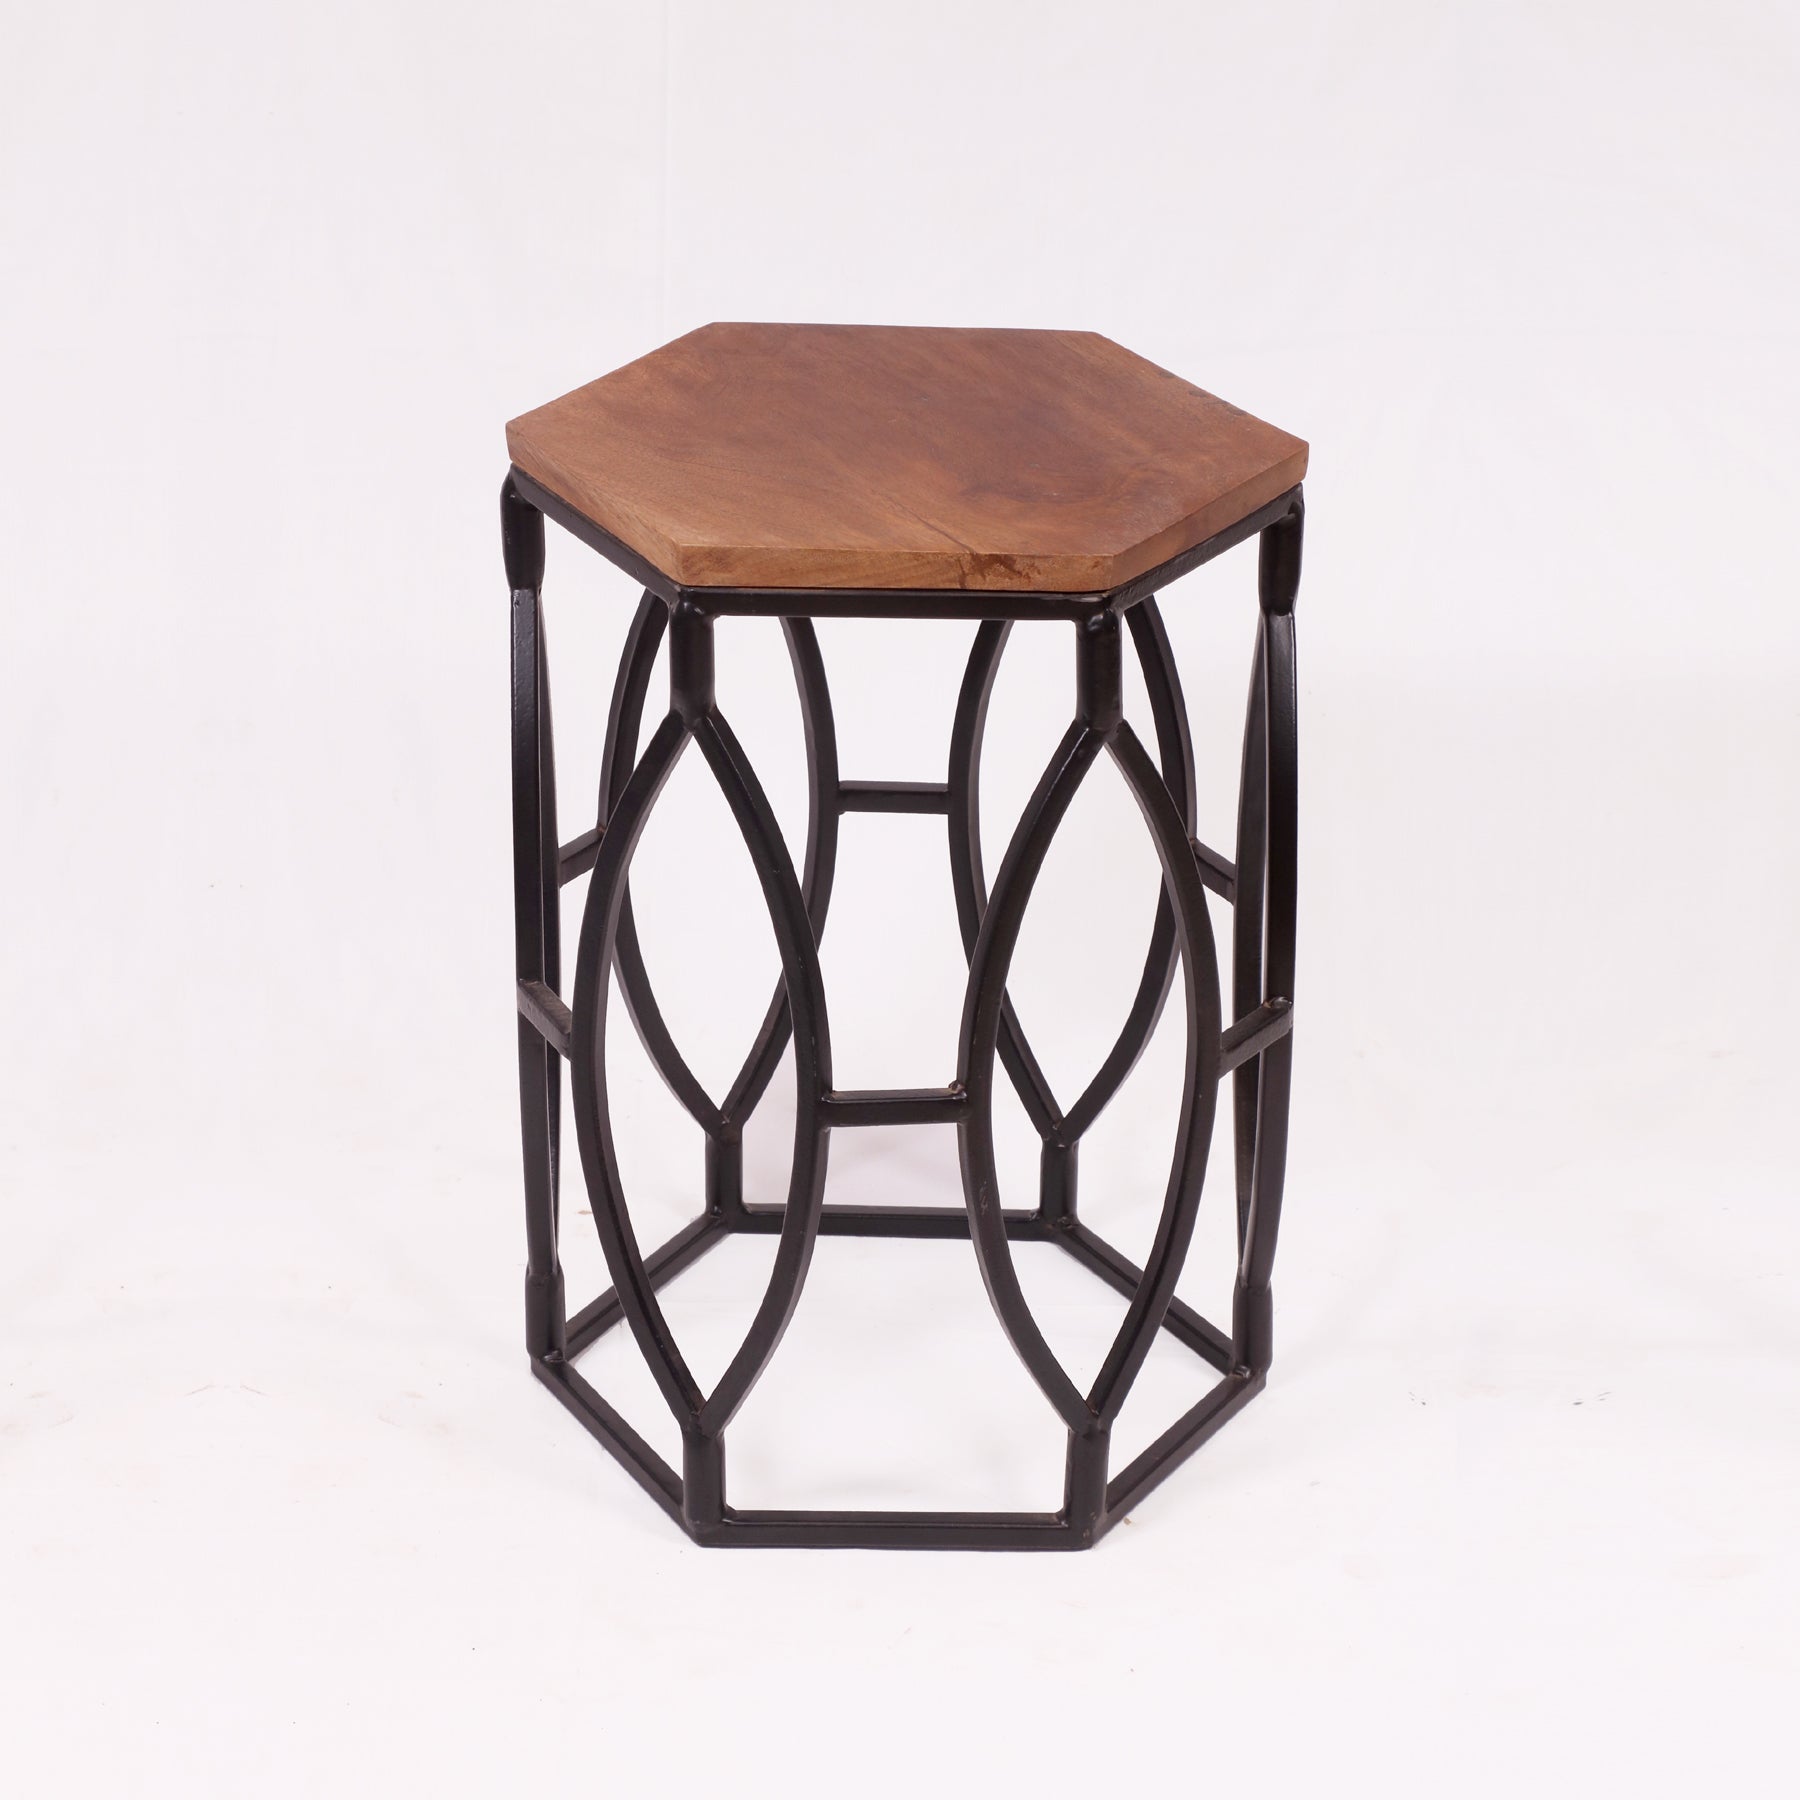 Hexagonal Metallic Coffee Table (Black) End Table